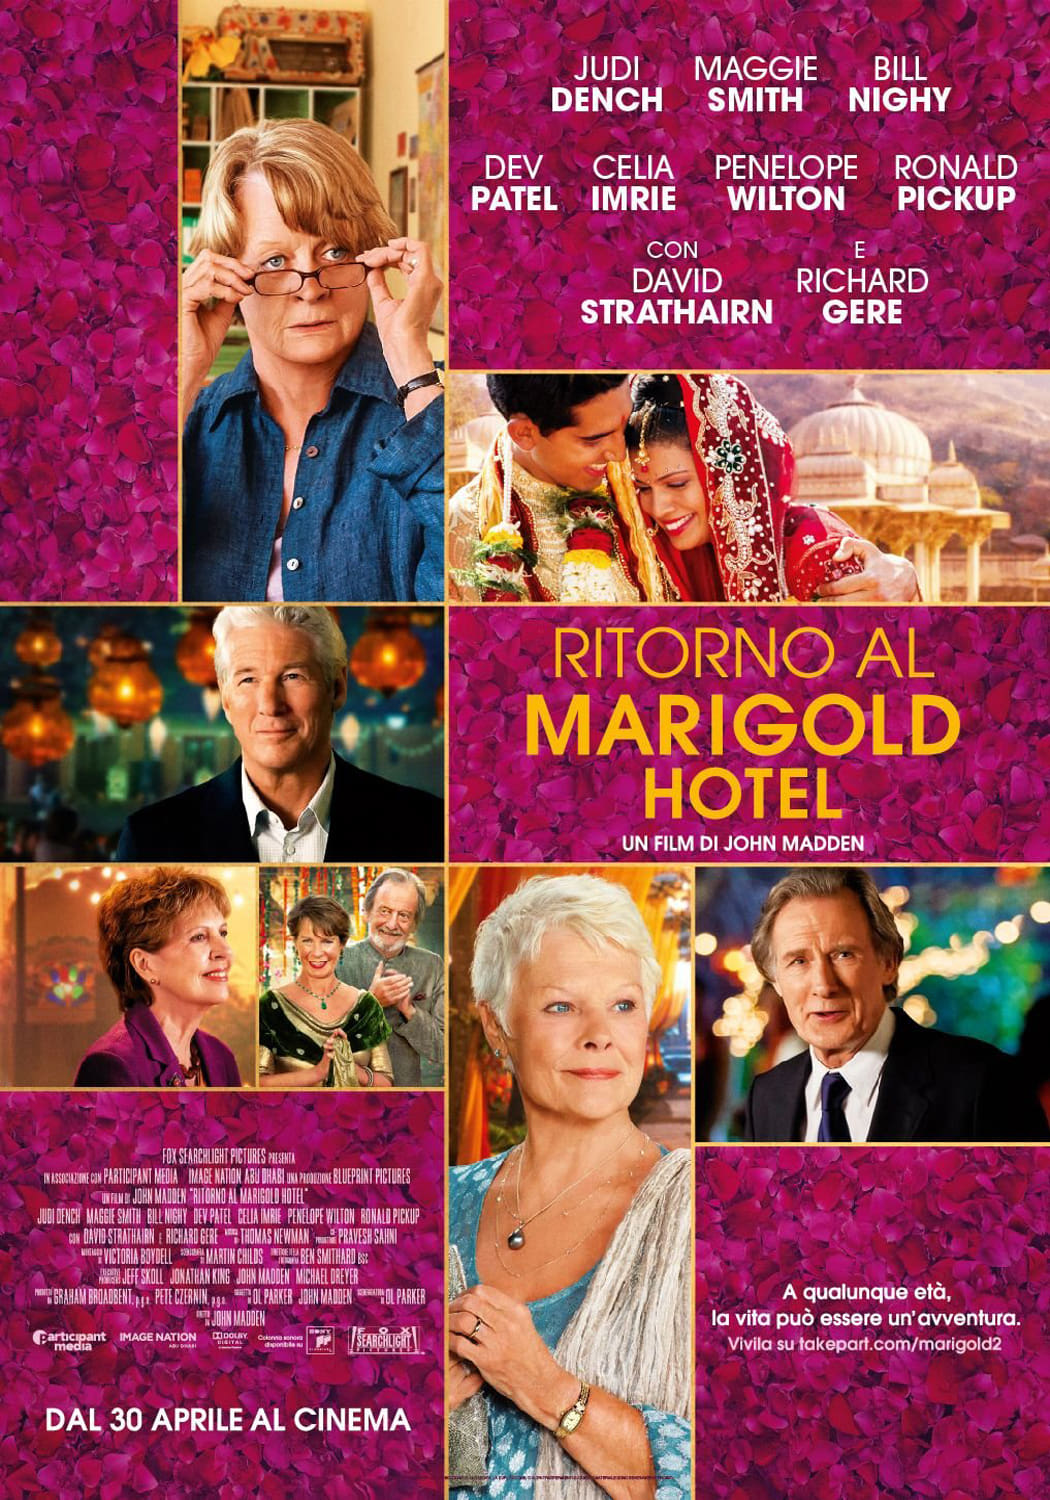 Best Exotic Marigold Hotel 2